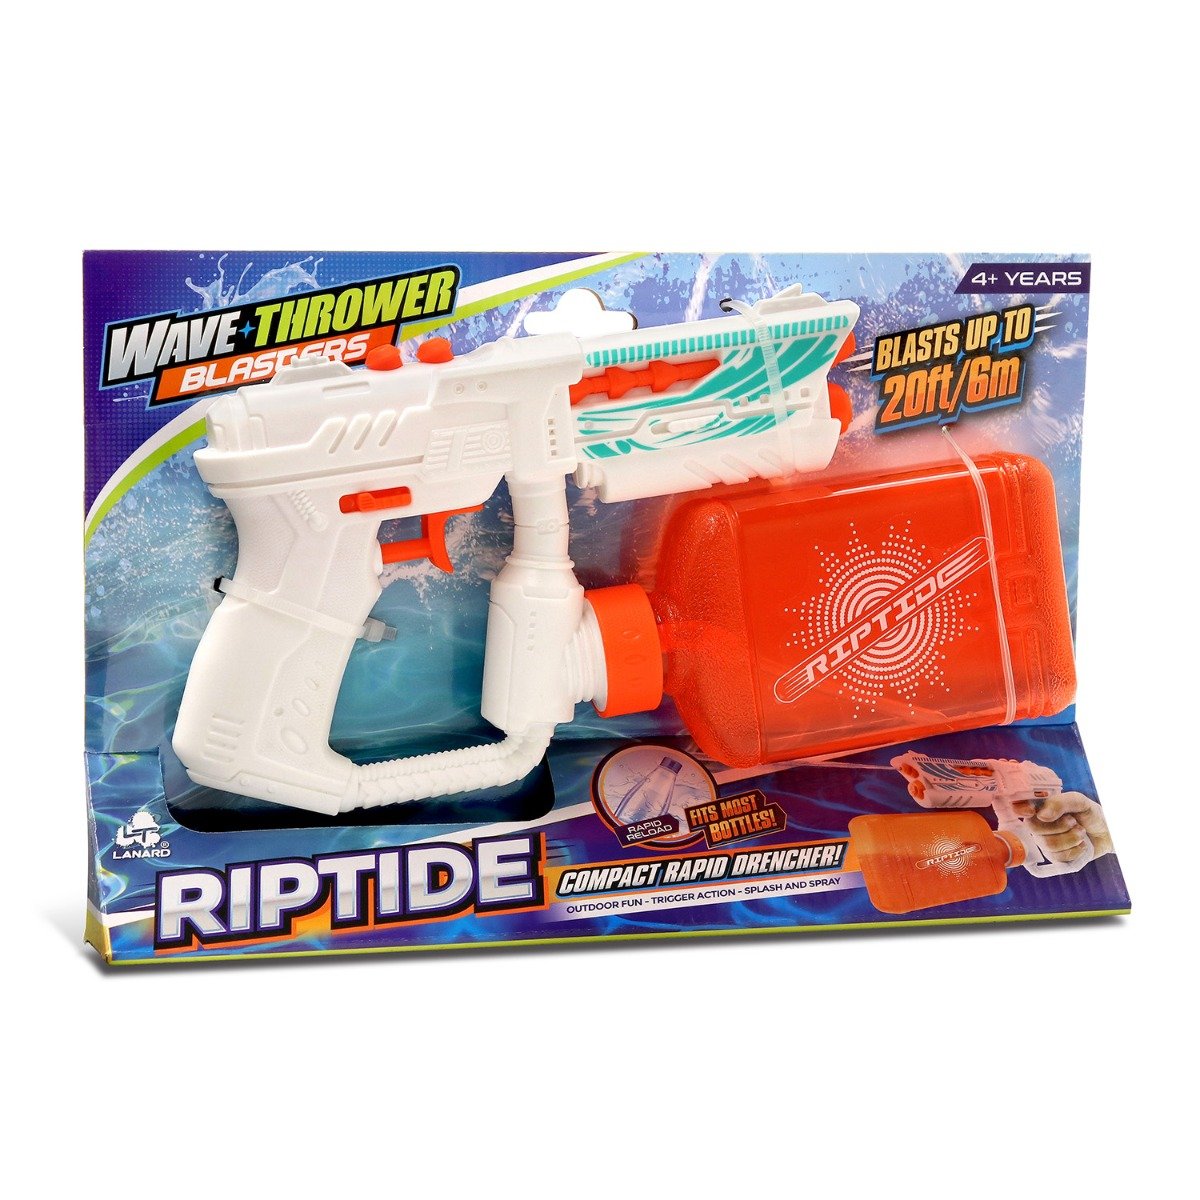 Pistol cu apa Lanard Toys, Wave Thrower Blasters, Riptide